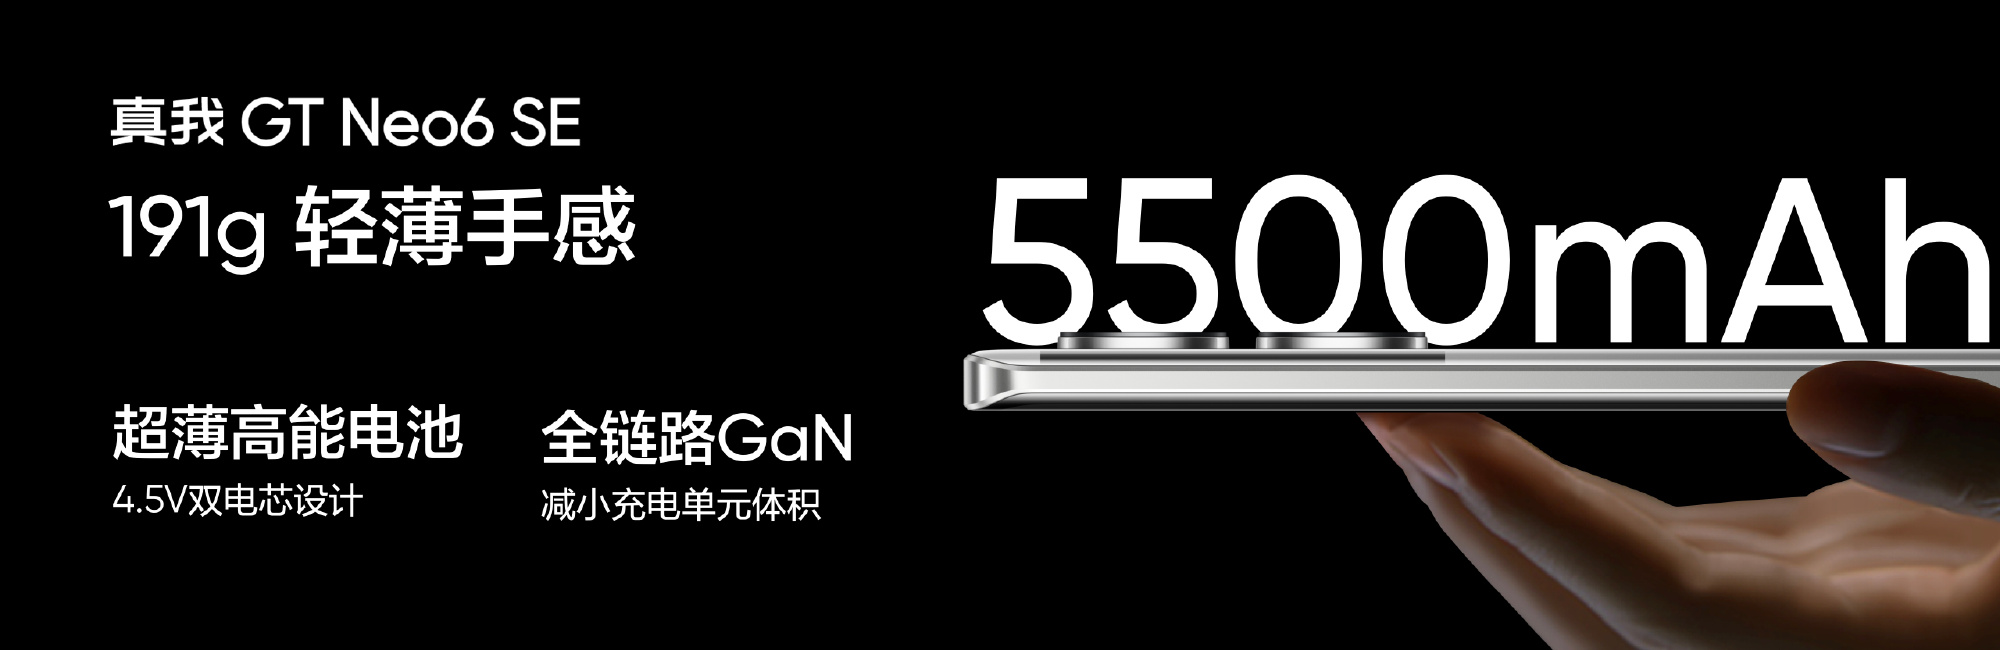 Ёмкость батареи Realme GT Neo6 SE составляет 5500 мАч